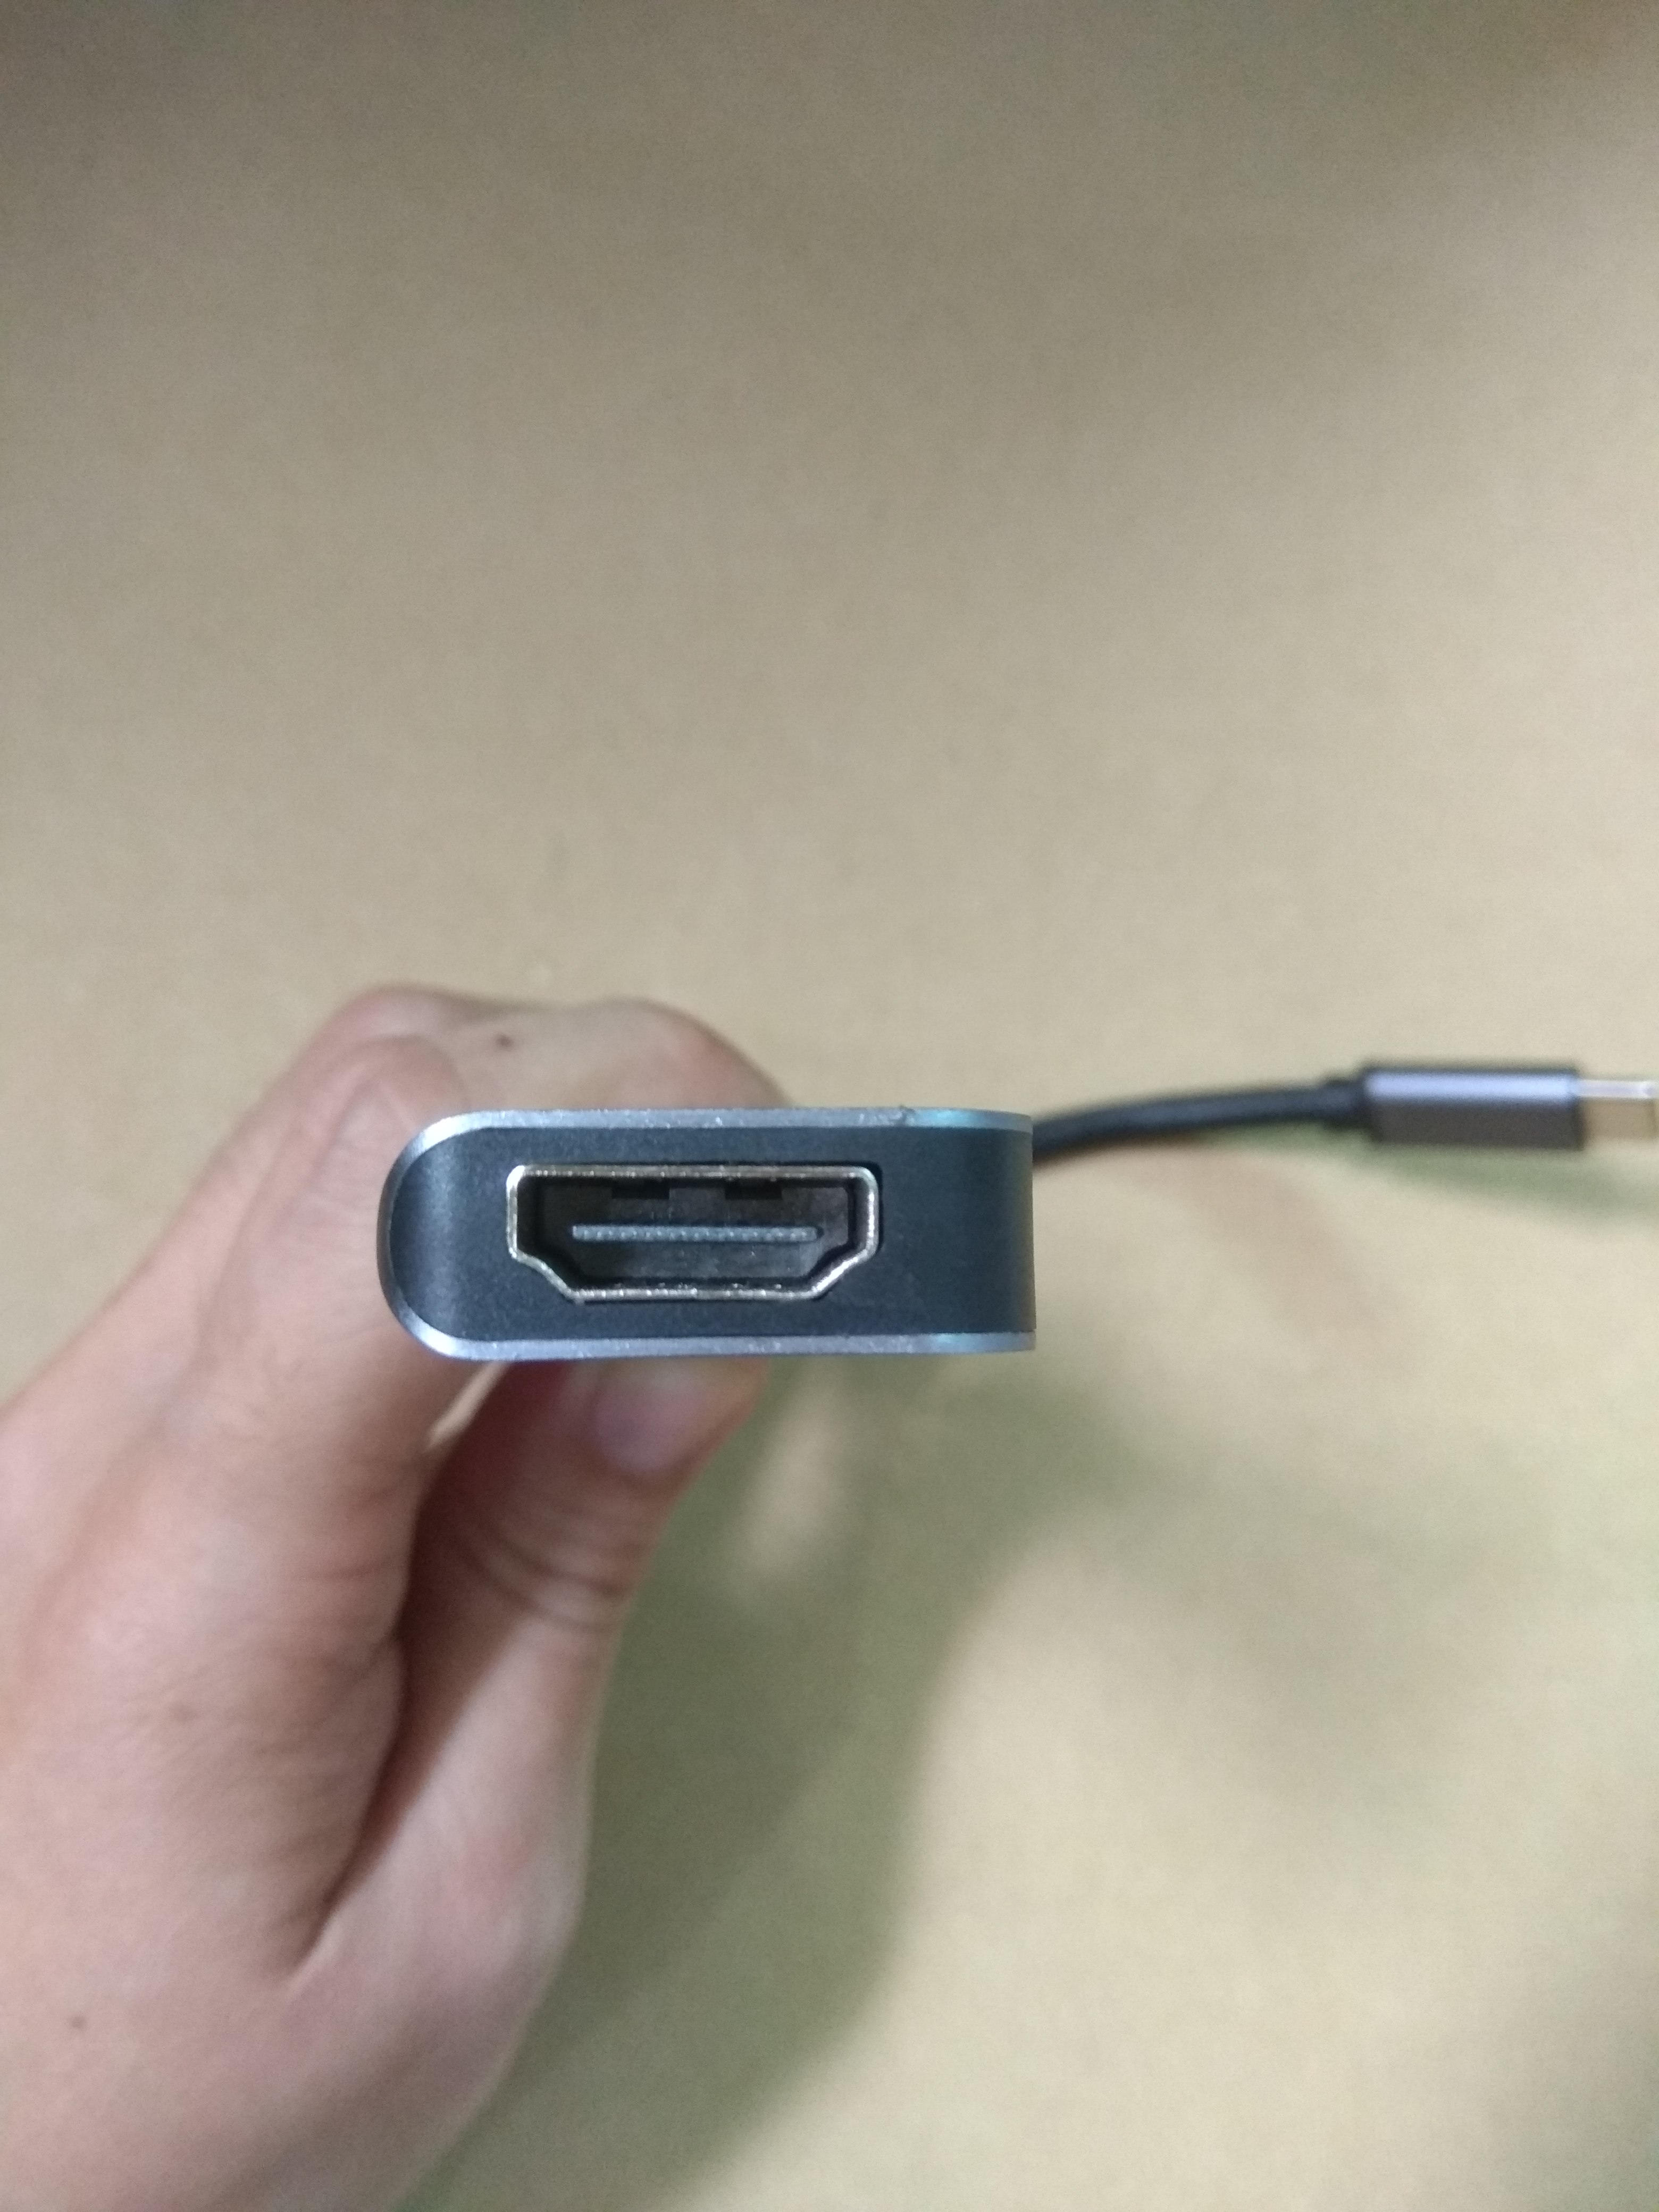 Hub USB Type-C 5 Cổng HDMI 4K 60Hz/ USB 3.0/ Type-C/ PD 50538 - 5in1-3 60Hz